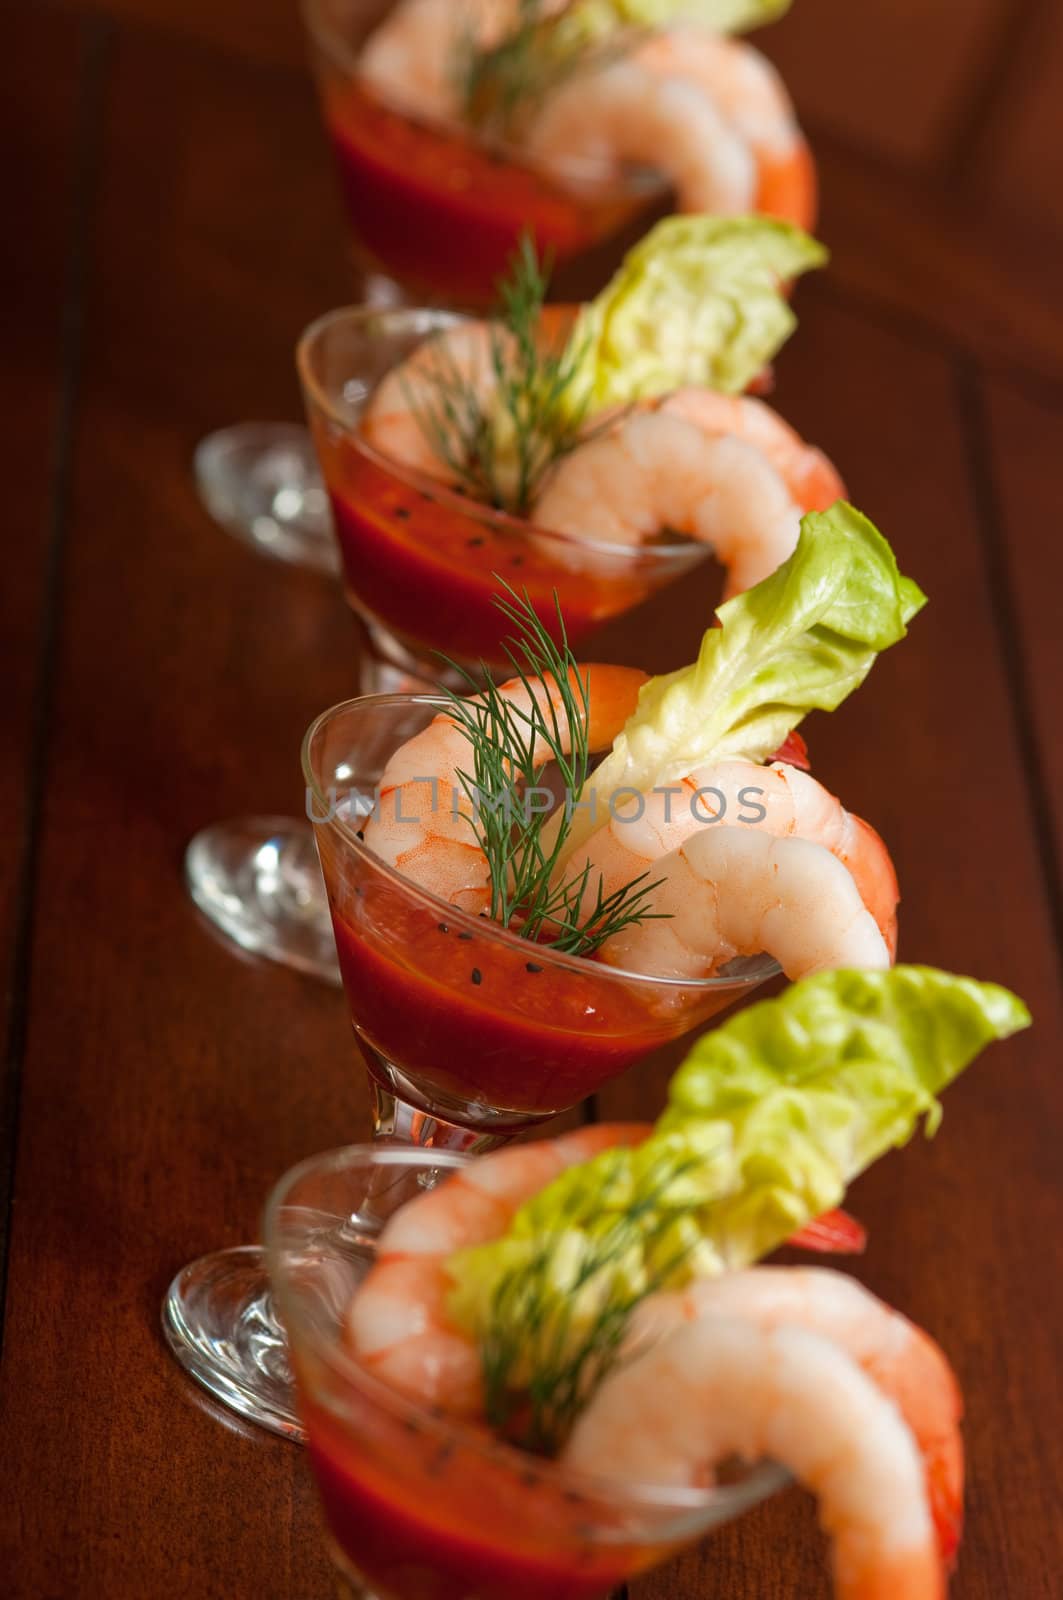 Shrimp cocktails during a party